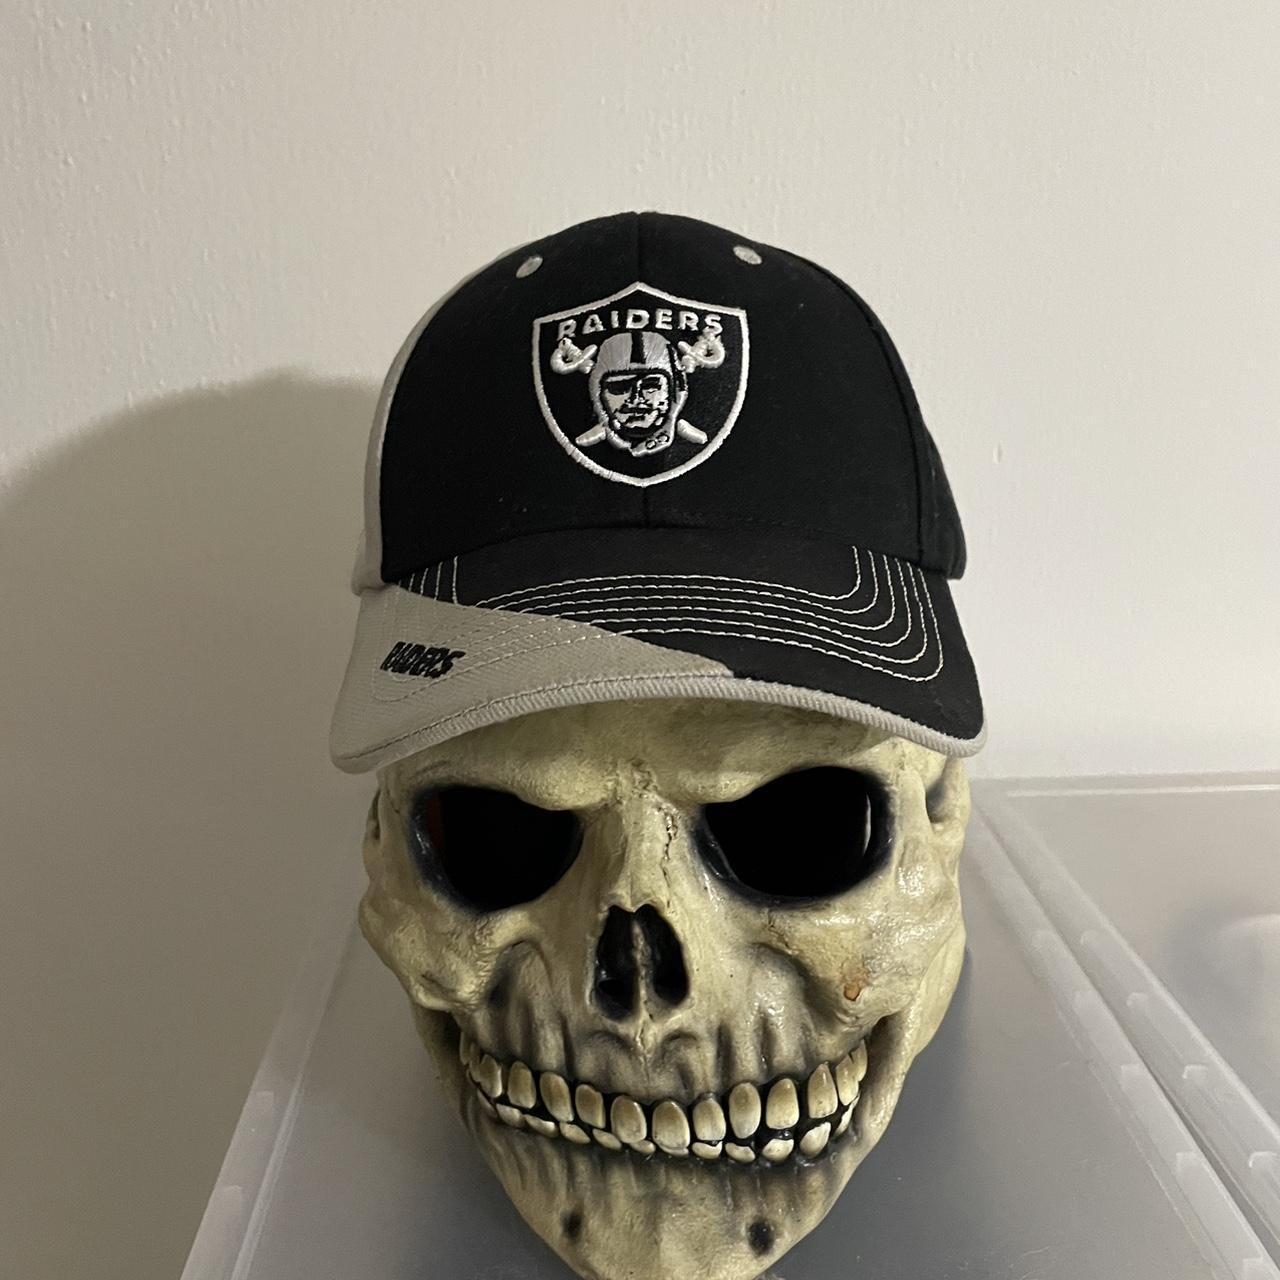 lv raiders skull cap